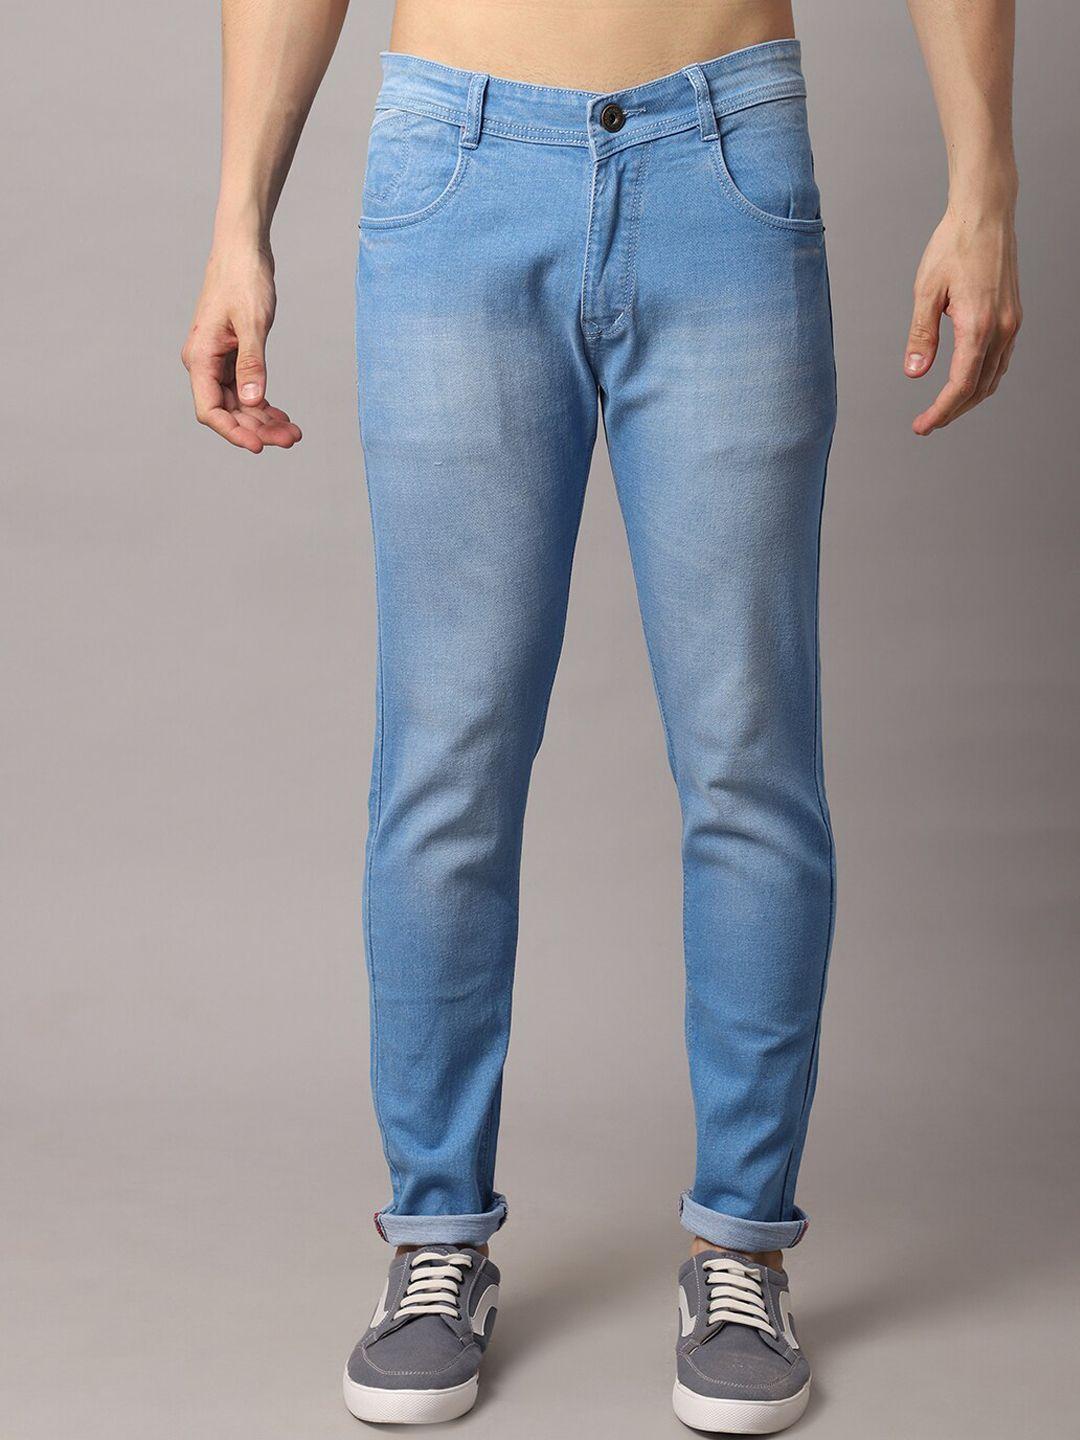 rodamo men blue slim fit light fade stretchable jeans